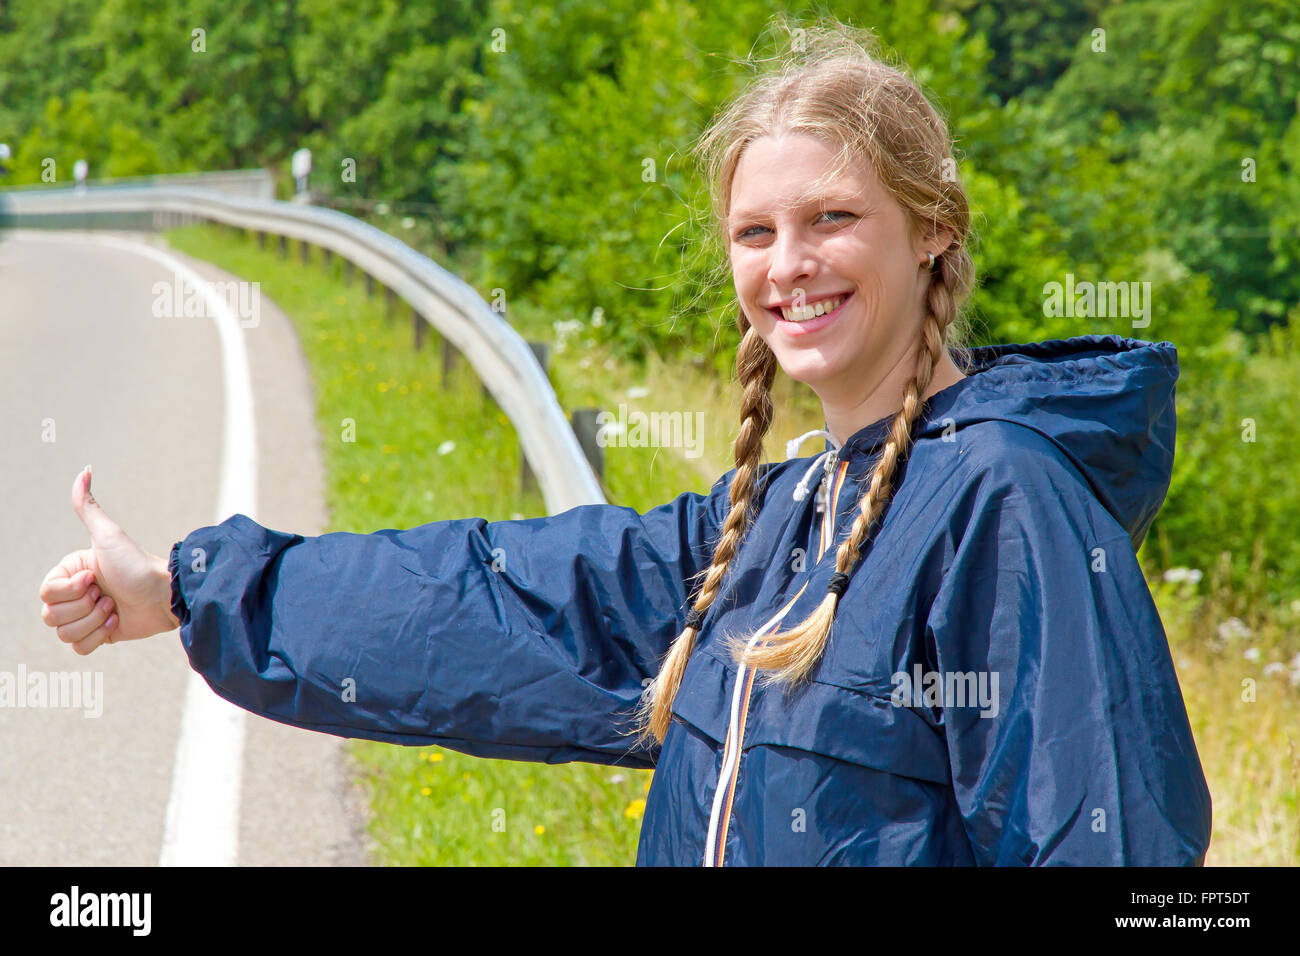 Young woman hitchhiking Stock Photo